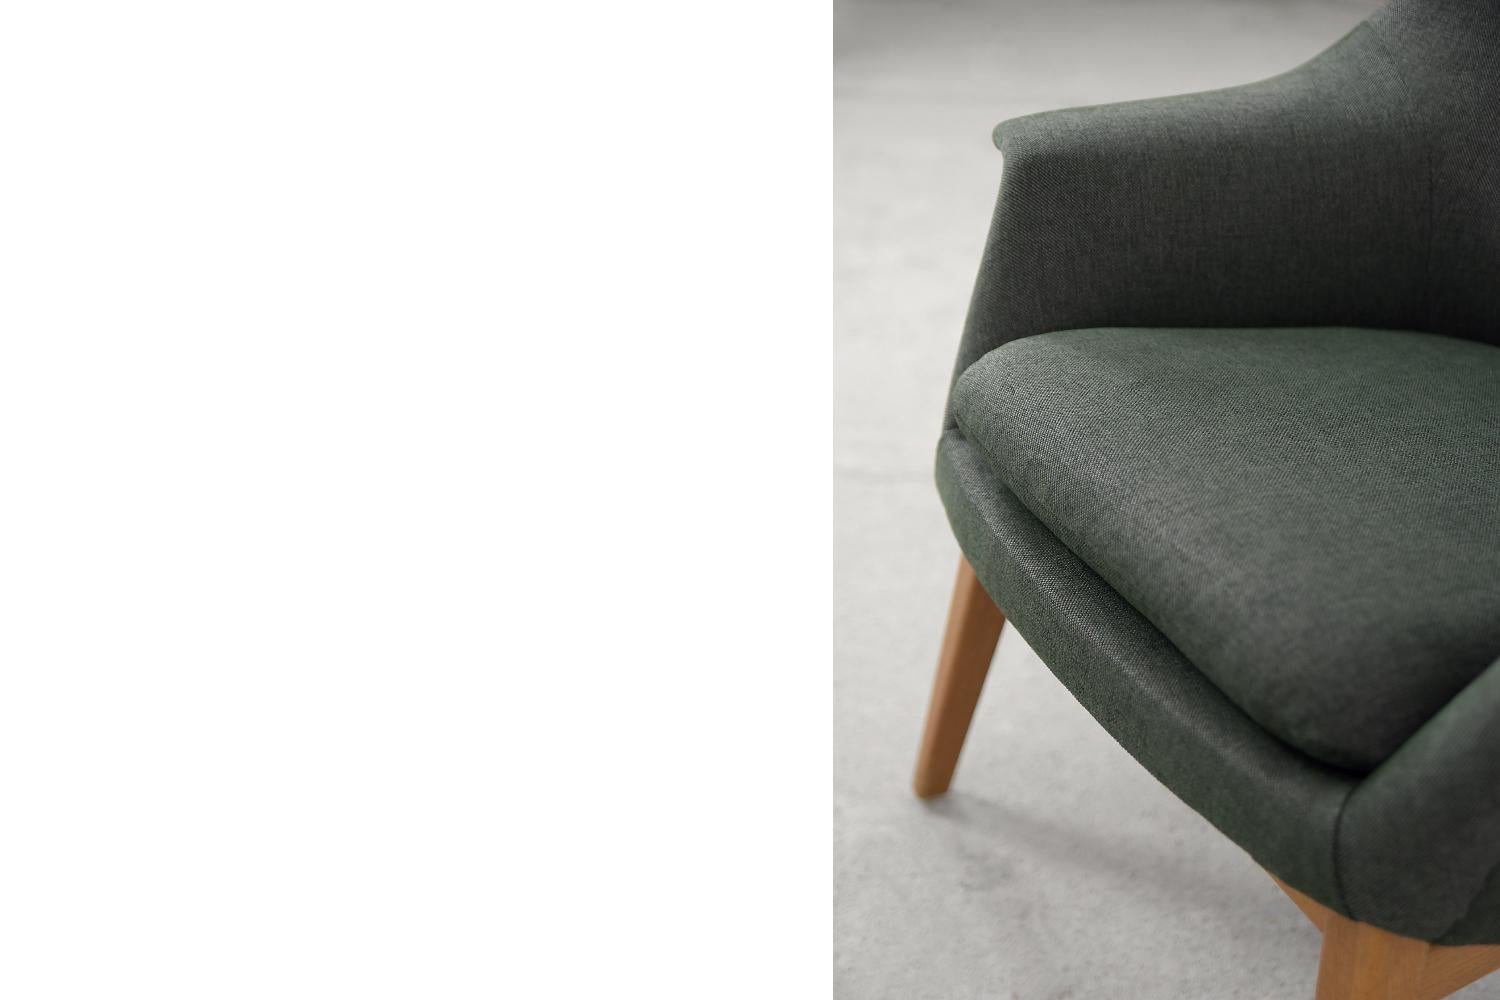 Fabric Vintage Scandinavian Modern Armchair in Green fabric and Beech wood legs, 1950s.